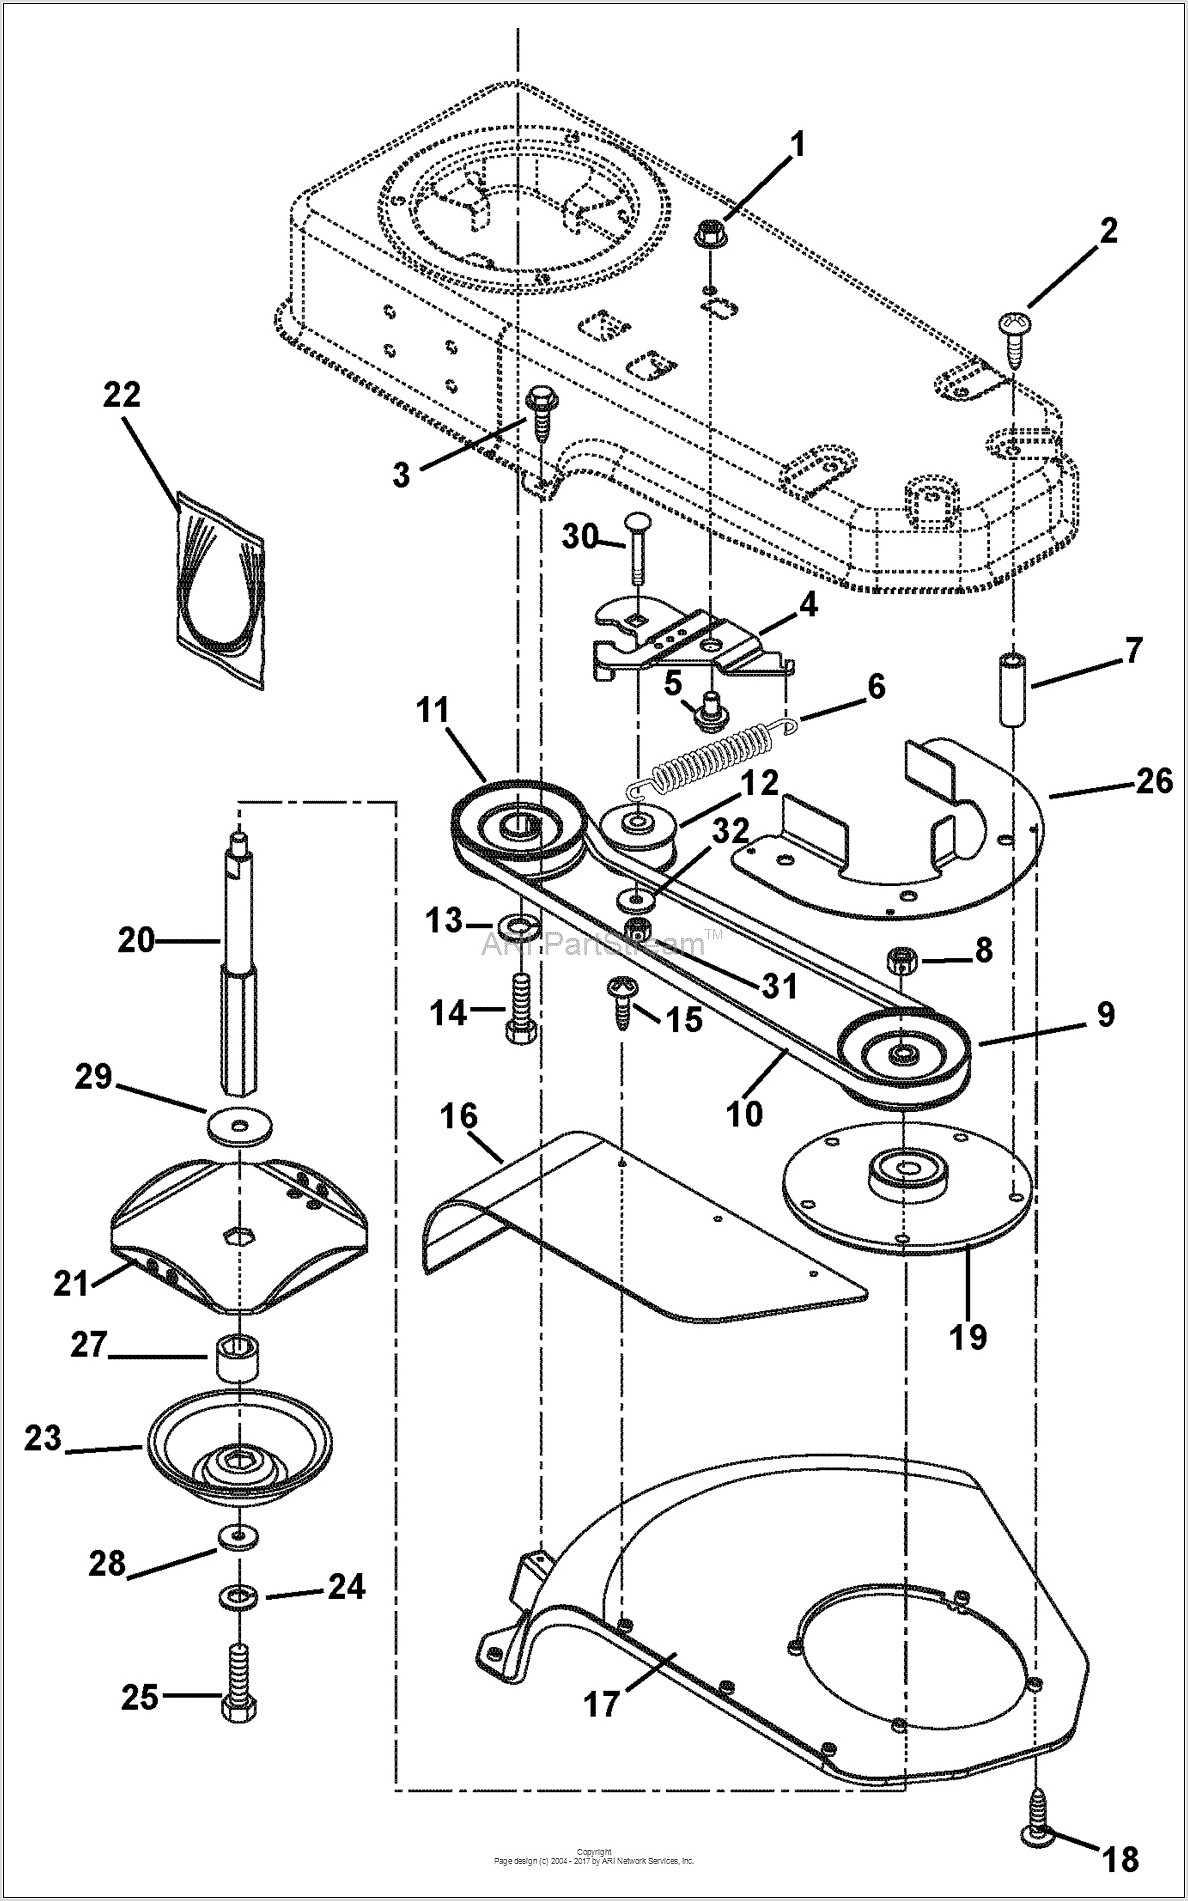 Tecumseh Lawn Mower Engine Diagram